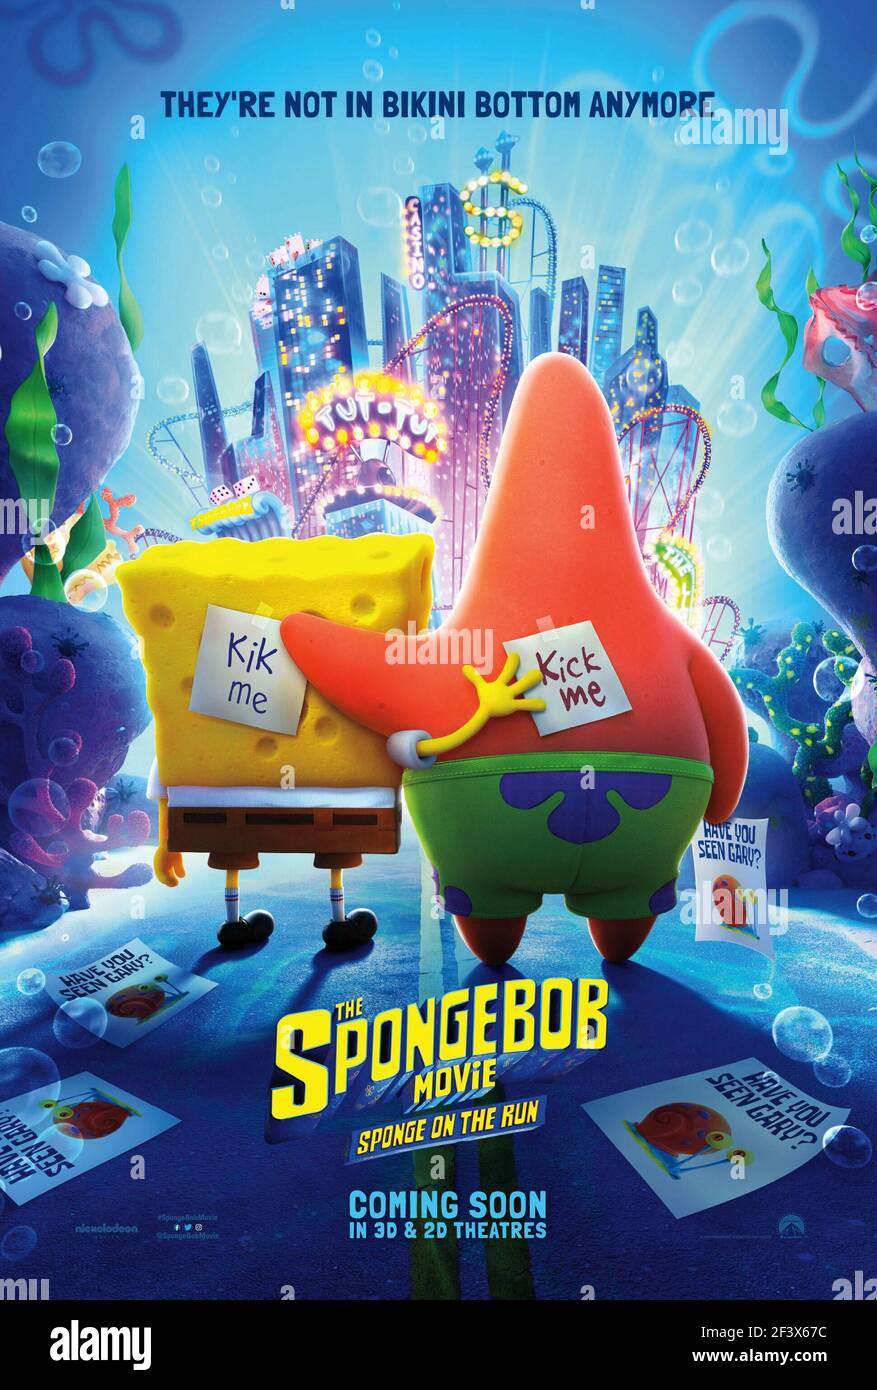 FILM SPONGEBOB, THE: SPONGE ON THE RUN (2020), RÉALISÉ PAR TIM HILL.  Credit: Animation Paramount / Nickelodeon films / Netfilx / Album Photo  Stock - Alamy